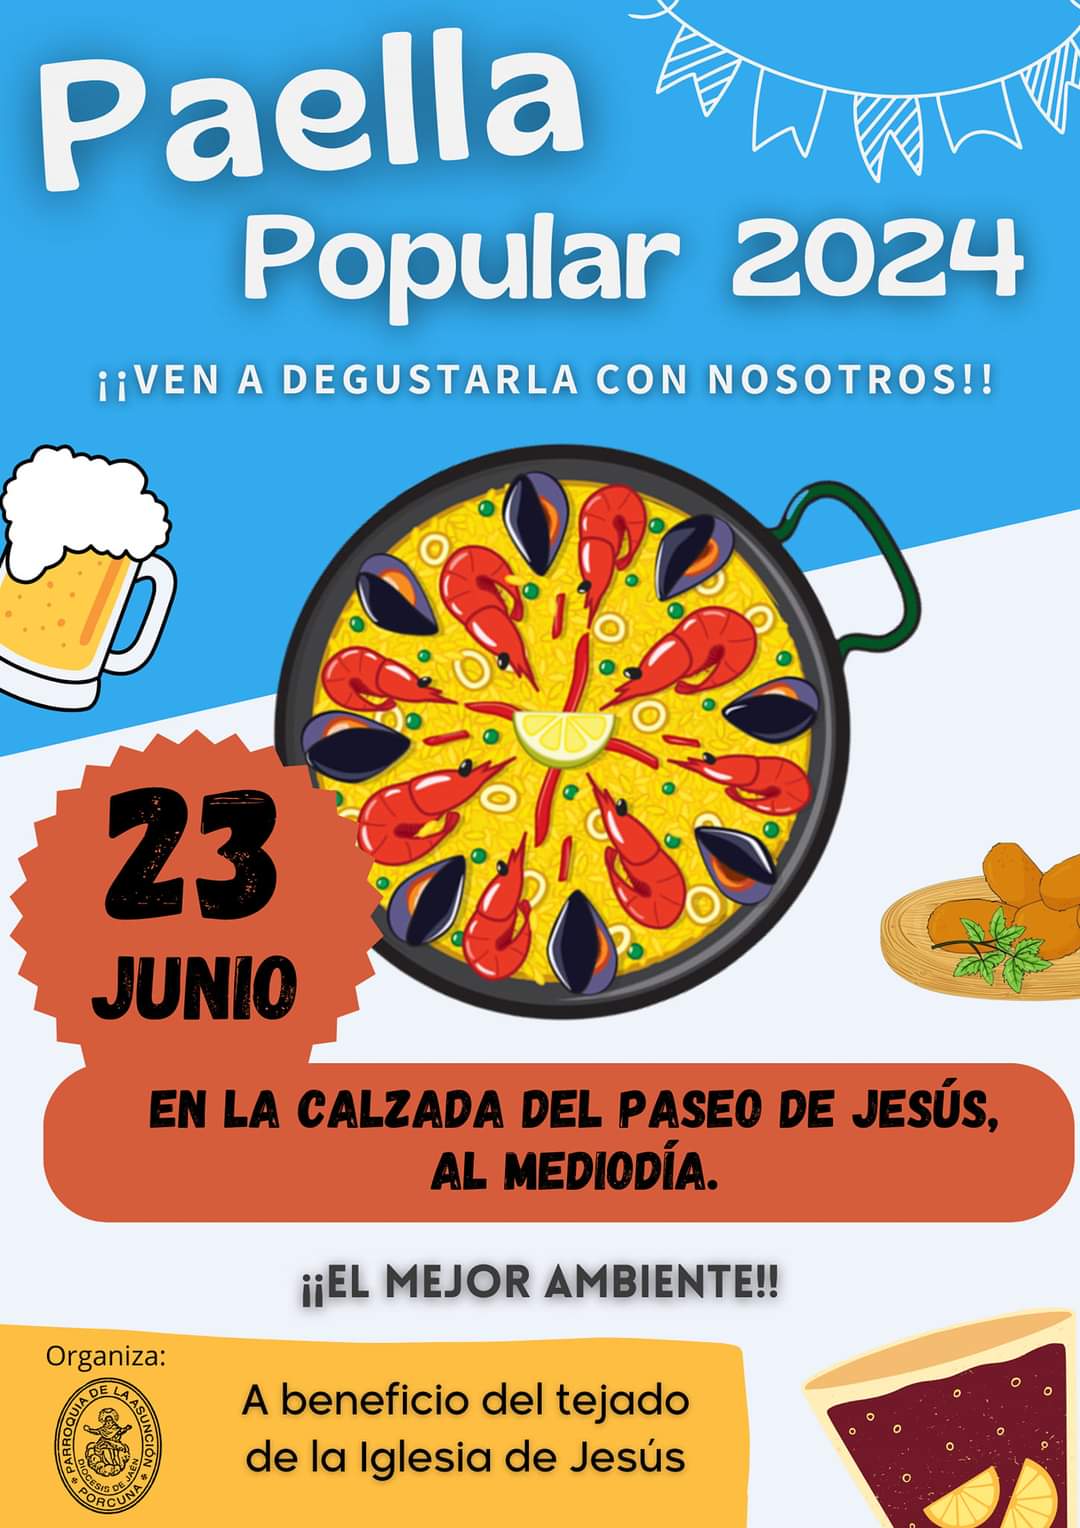 Paella popular 2024